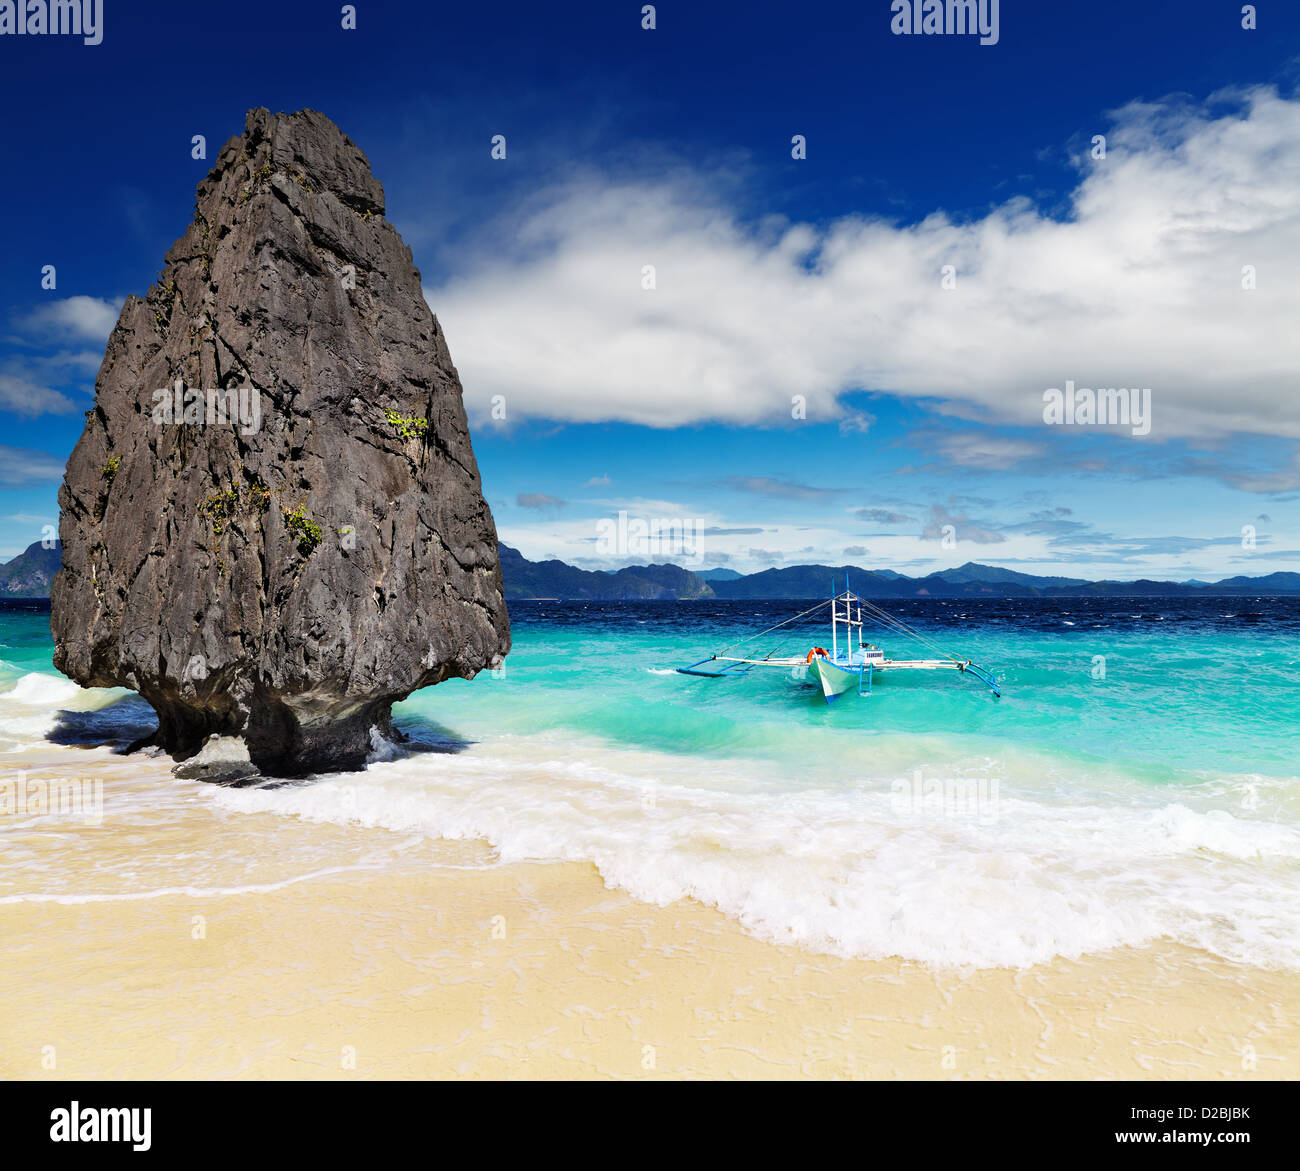 Tropical beach with bizarre rocks, El Nido, Philippines Stock Photo